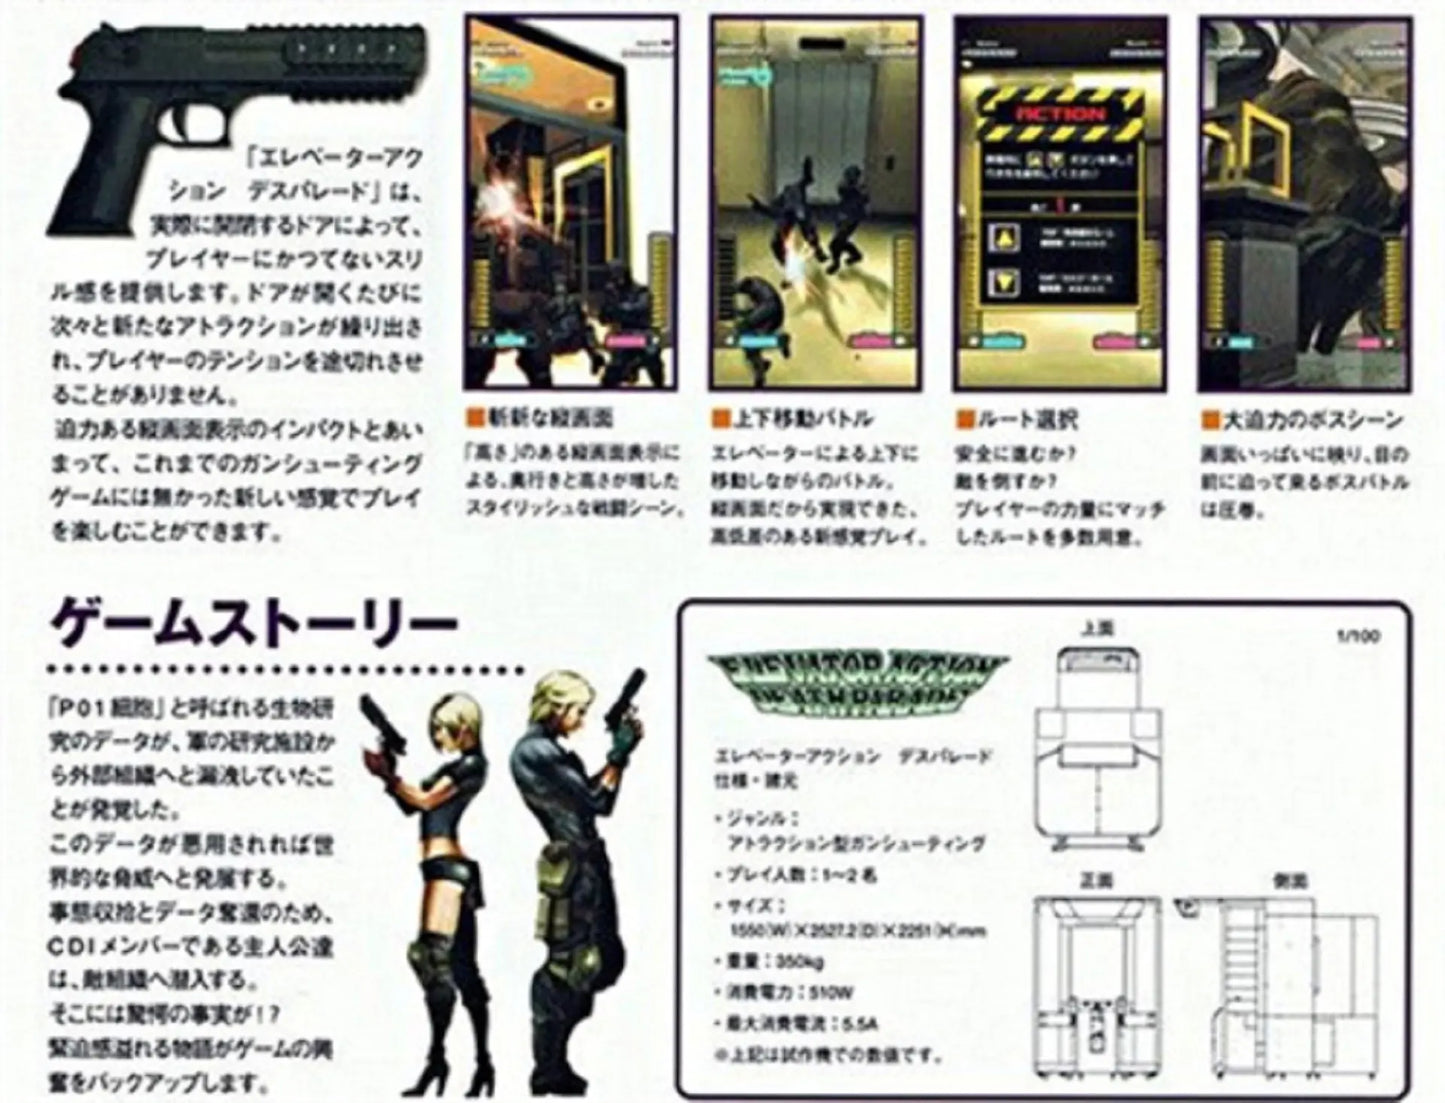 ELEVATOR-ACTION-DEATH-PARADE-Retro-Taito-shooting-arcade-game-machine-Tomy-Arcade